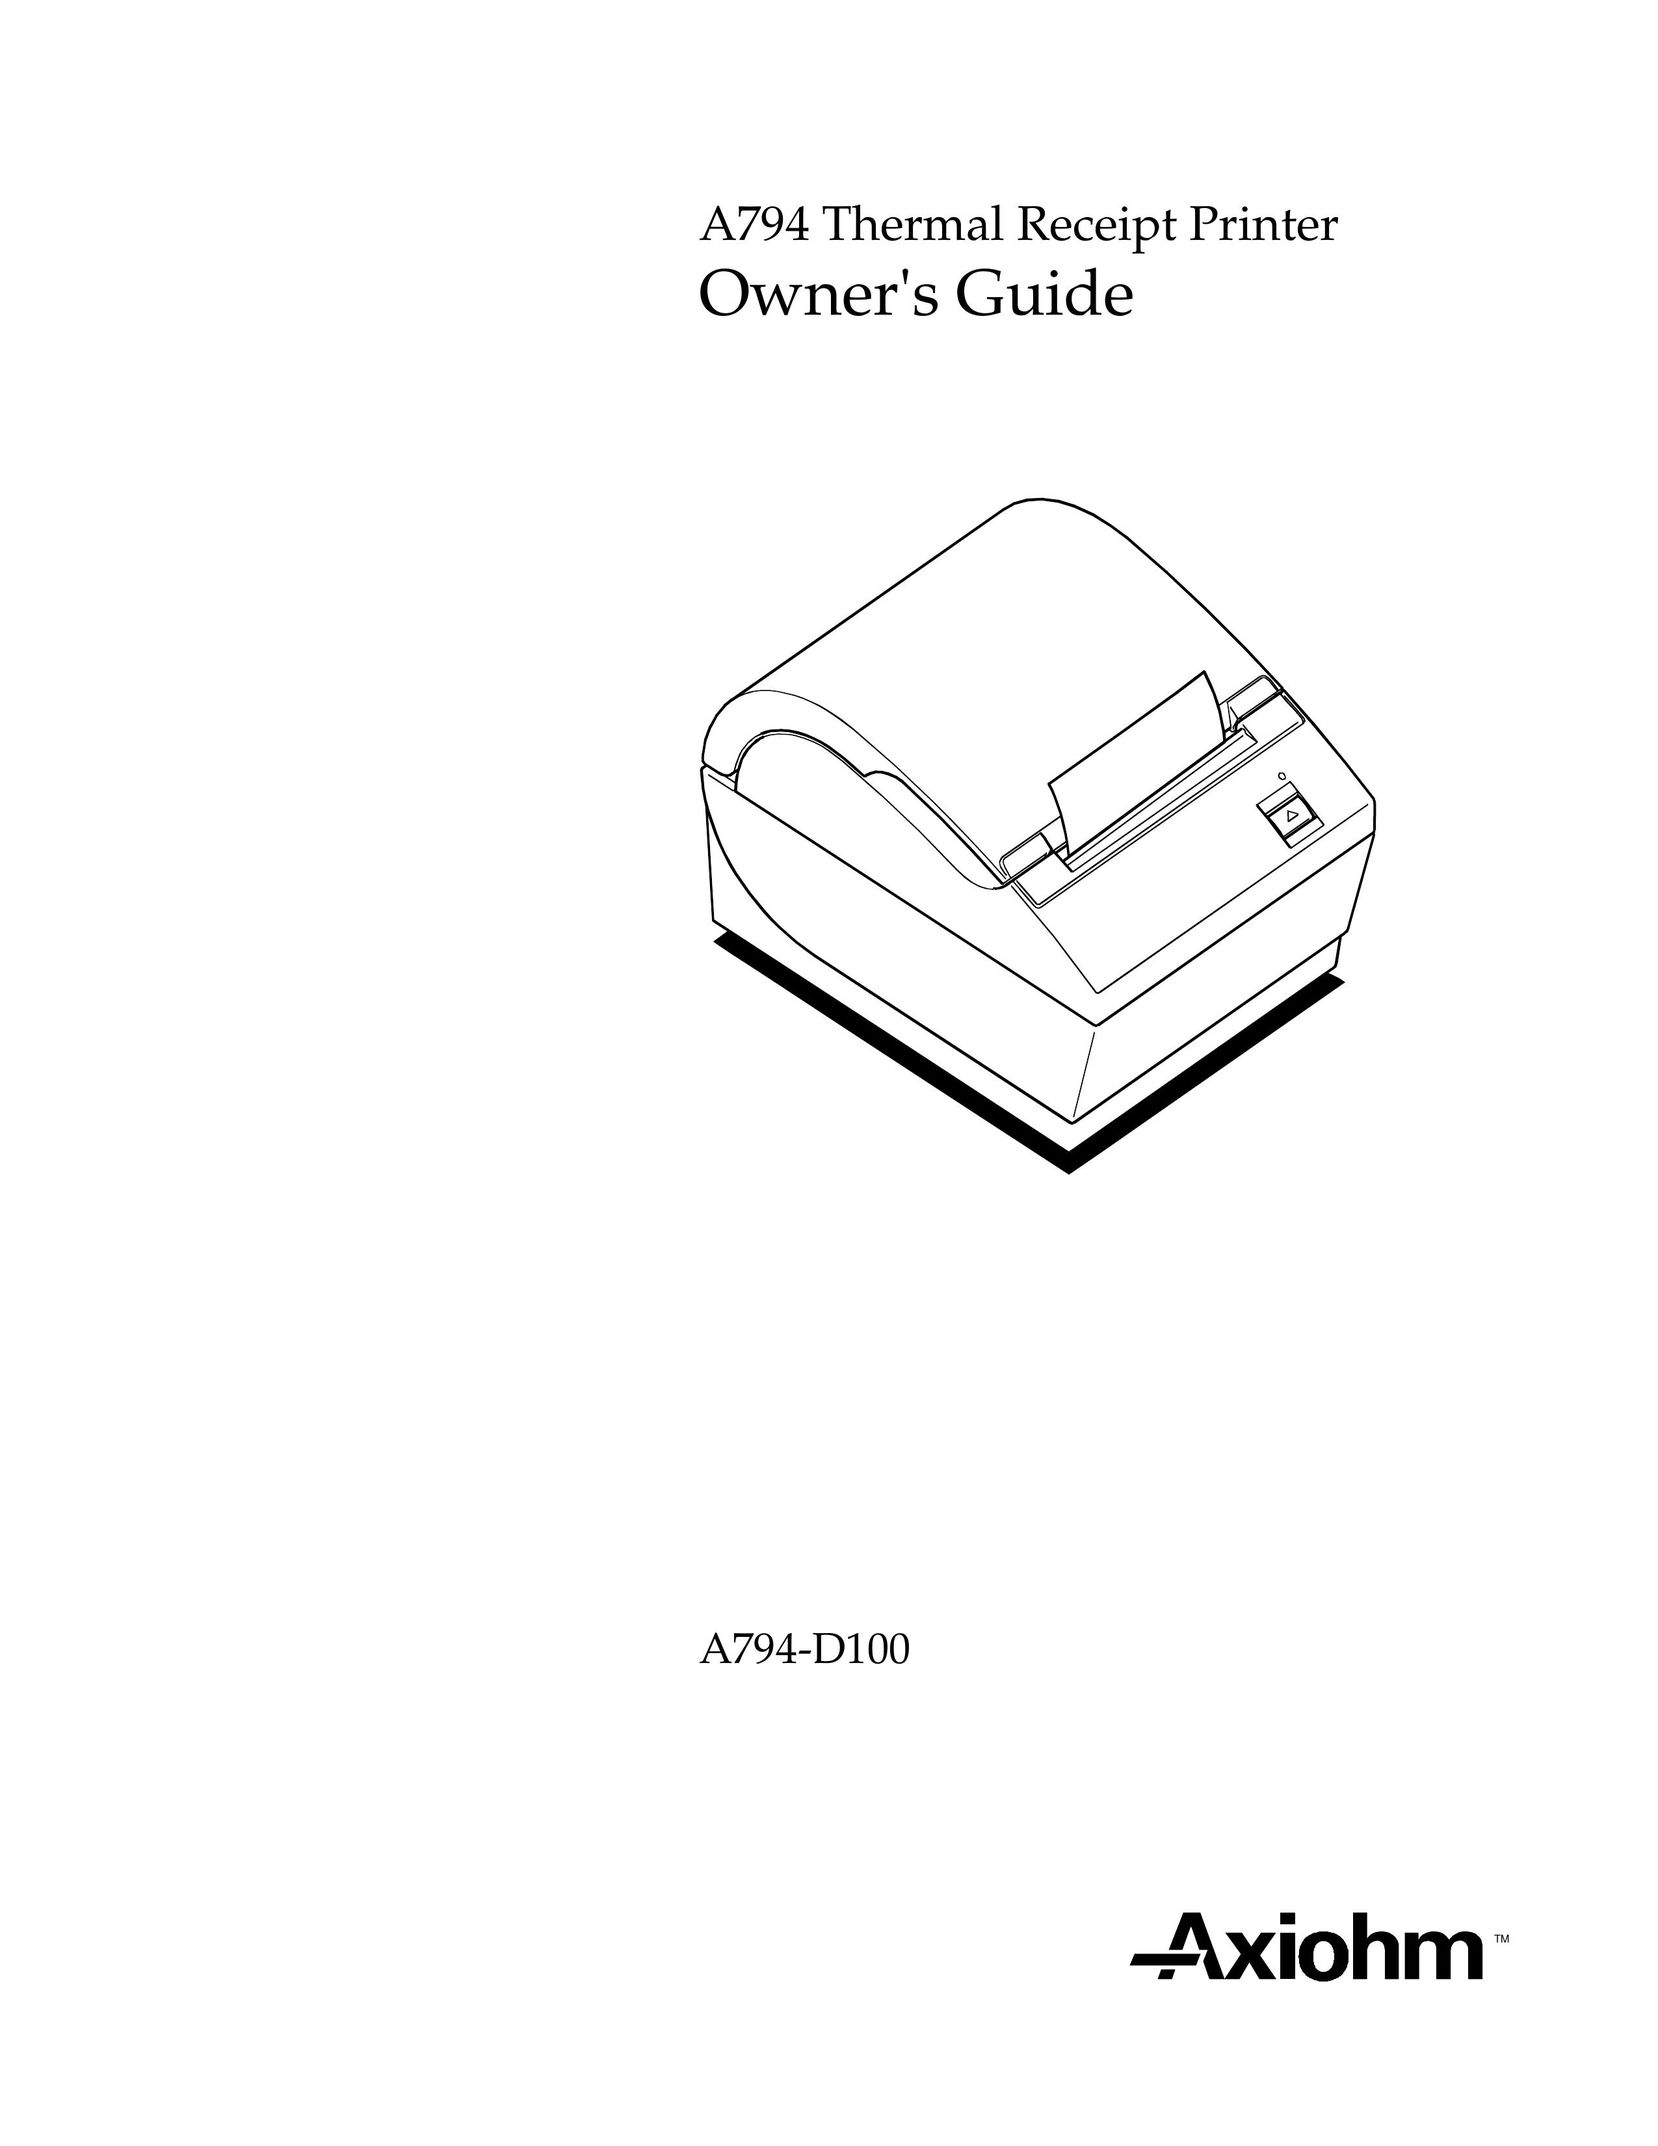 M-S Cash Drawer A794 Printer User Manual